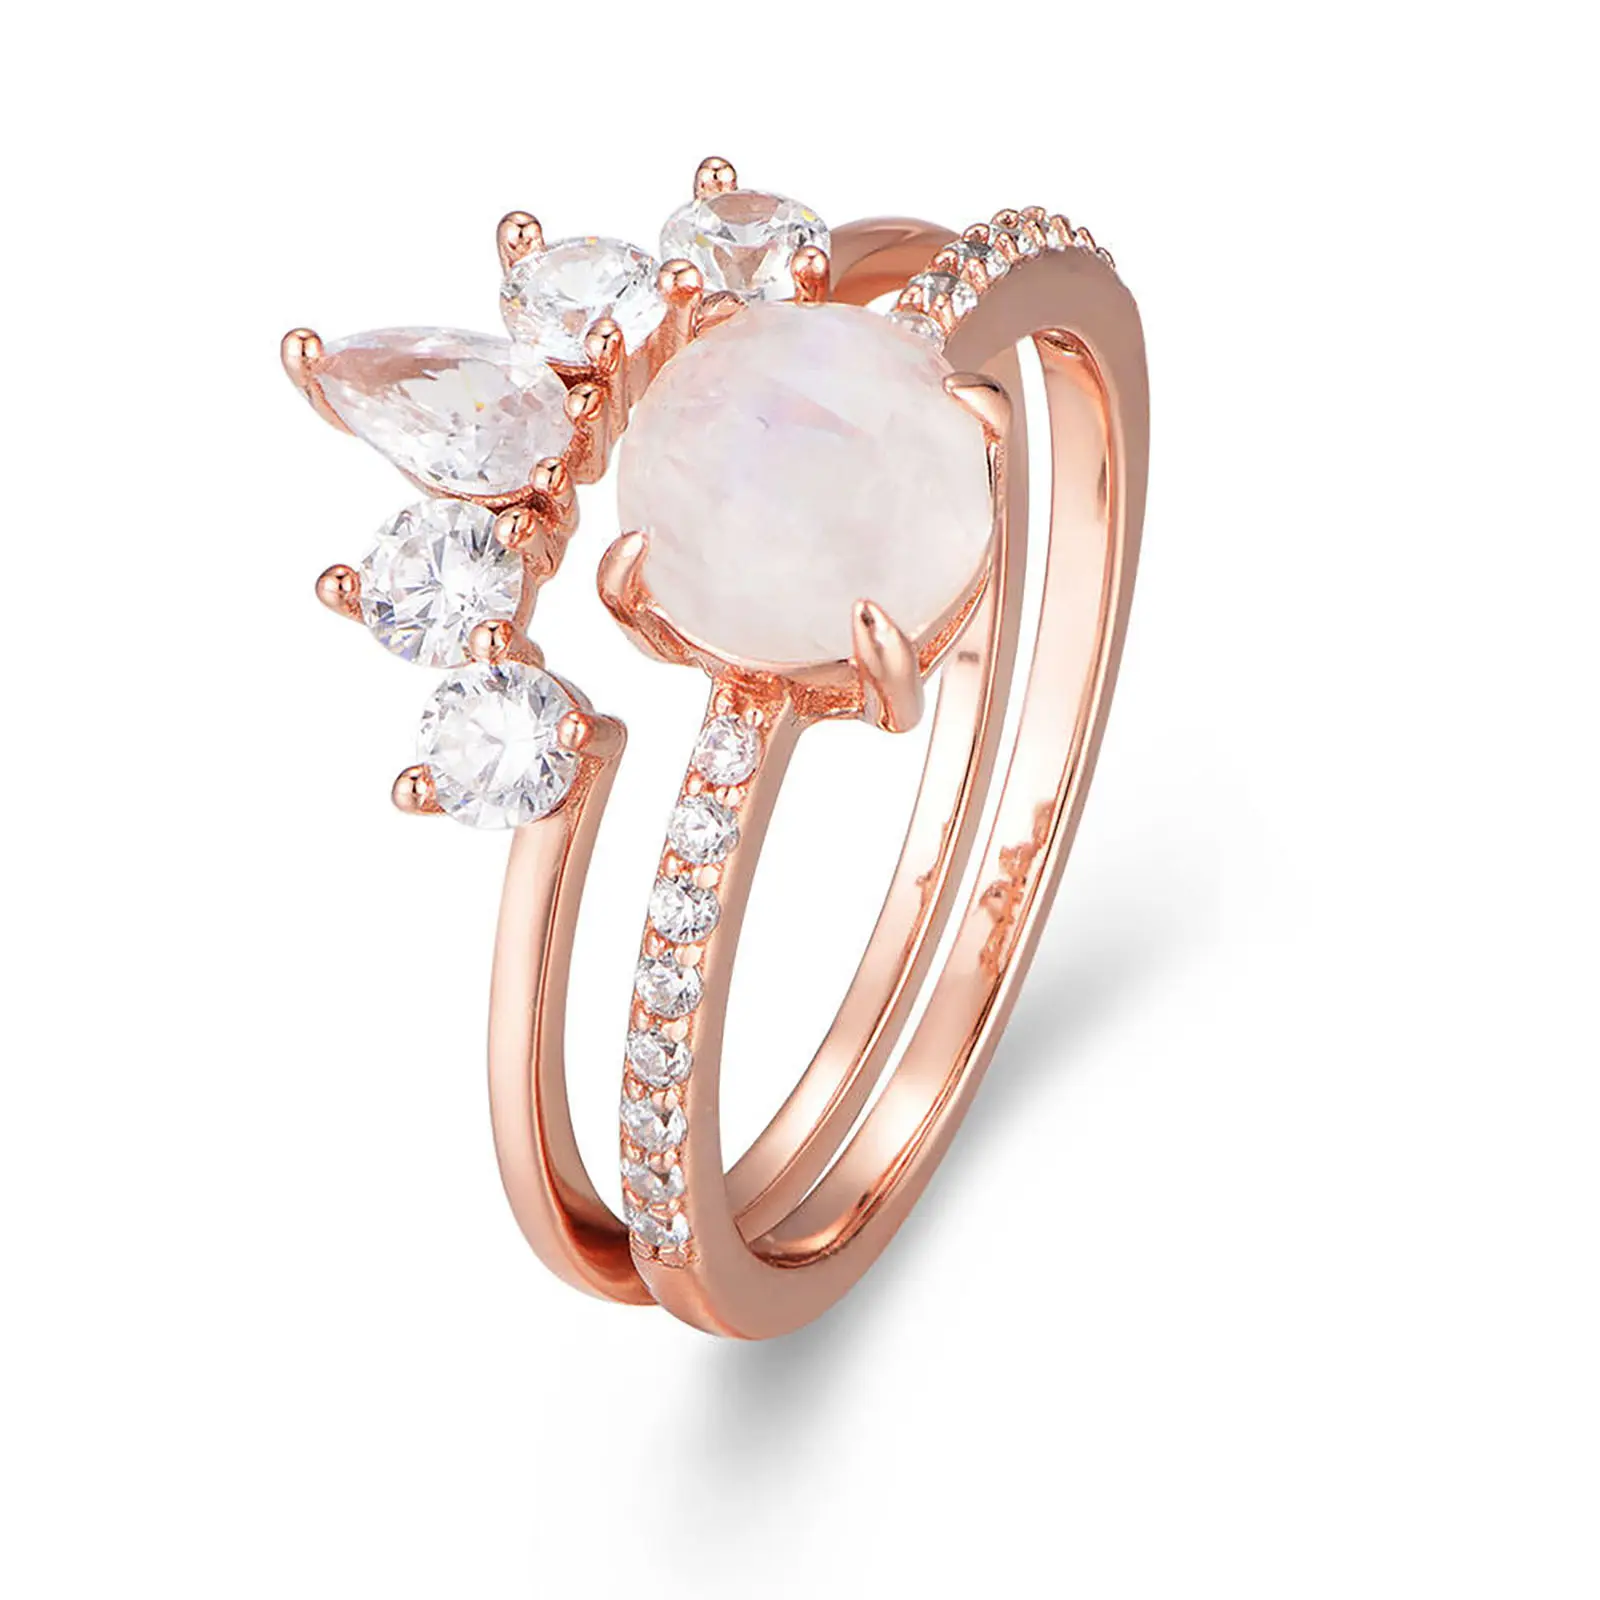 OEM hele jewelry Customized best selling personalised women cz gold engagement ring set